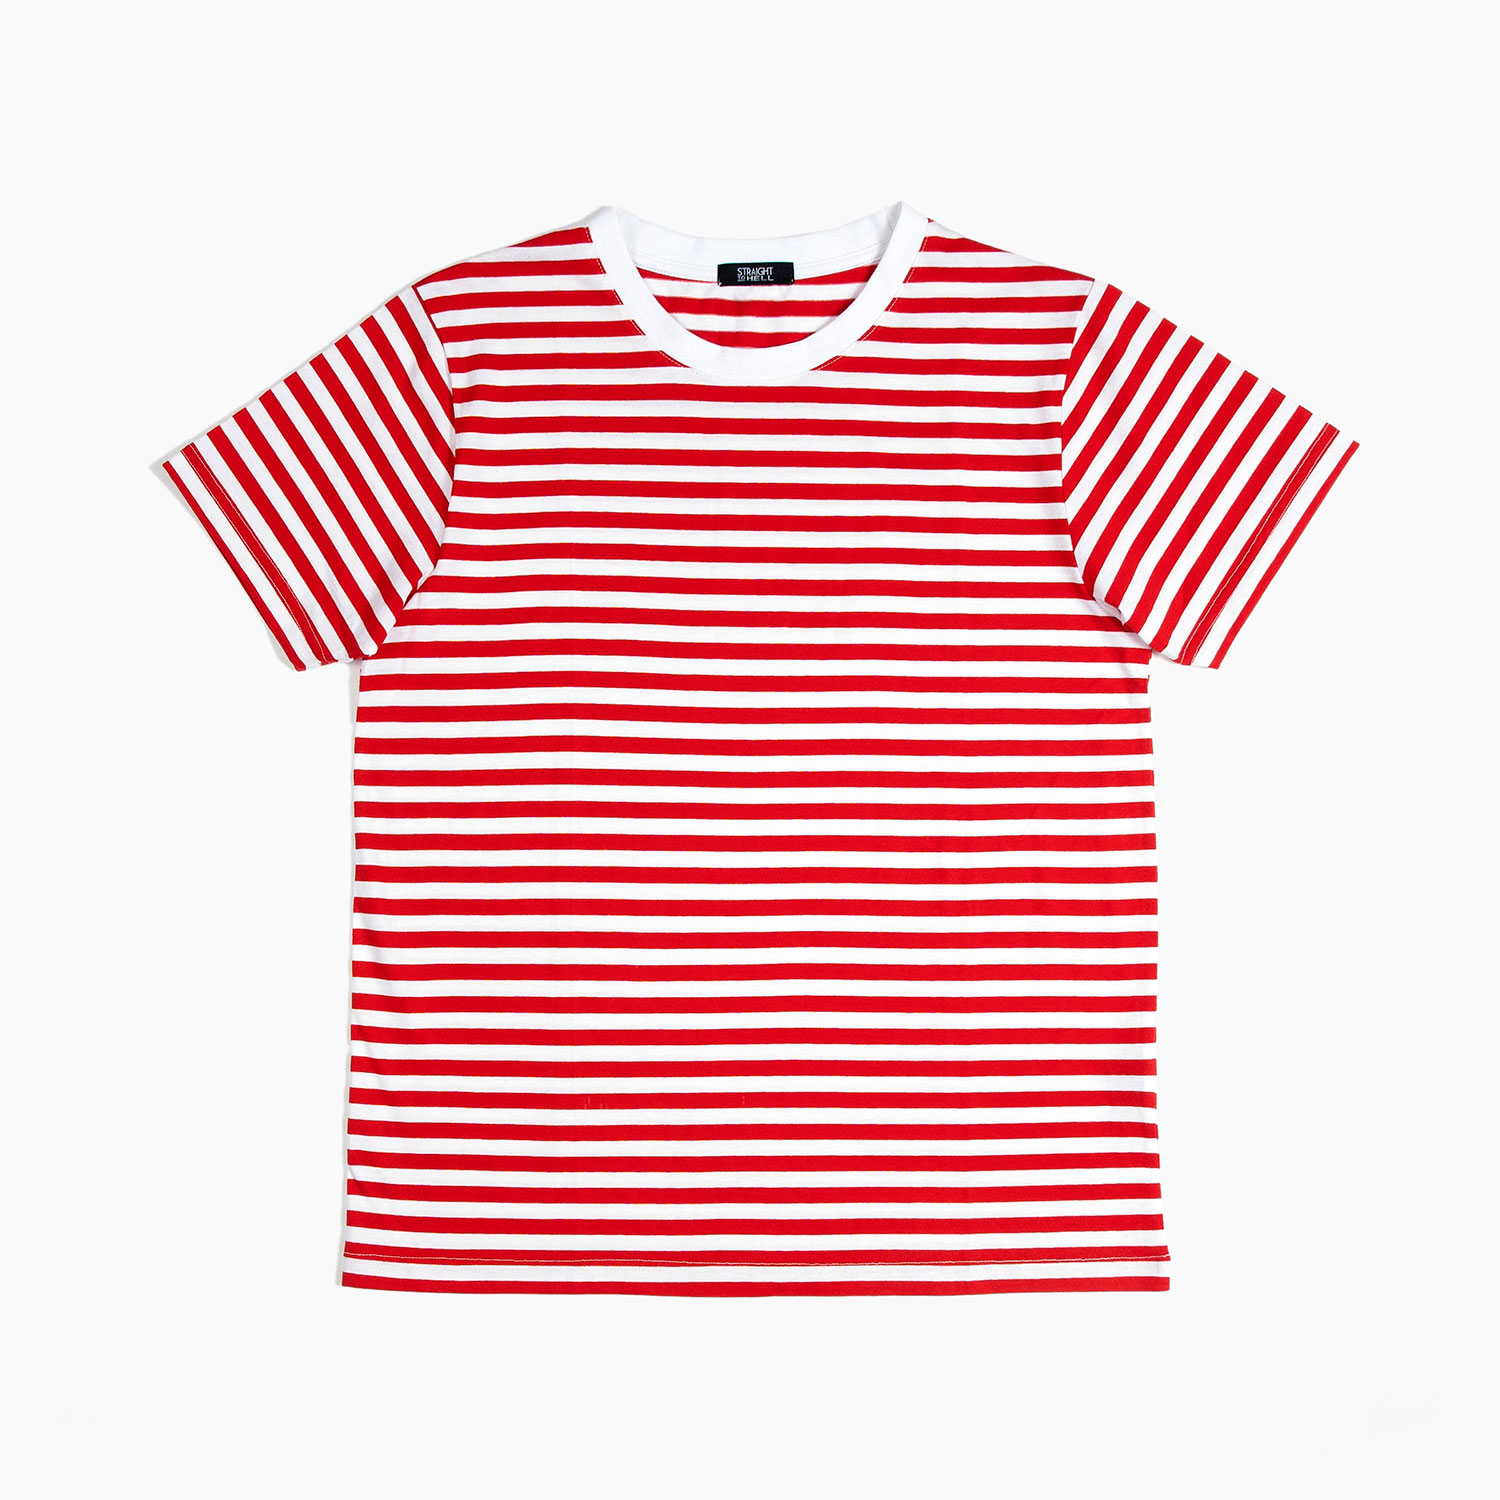 Jasper White and Red Striped TShirt (Size XS, S, M, L, XL, 2XL